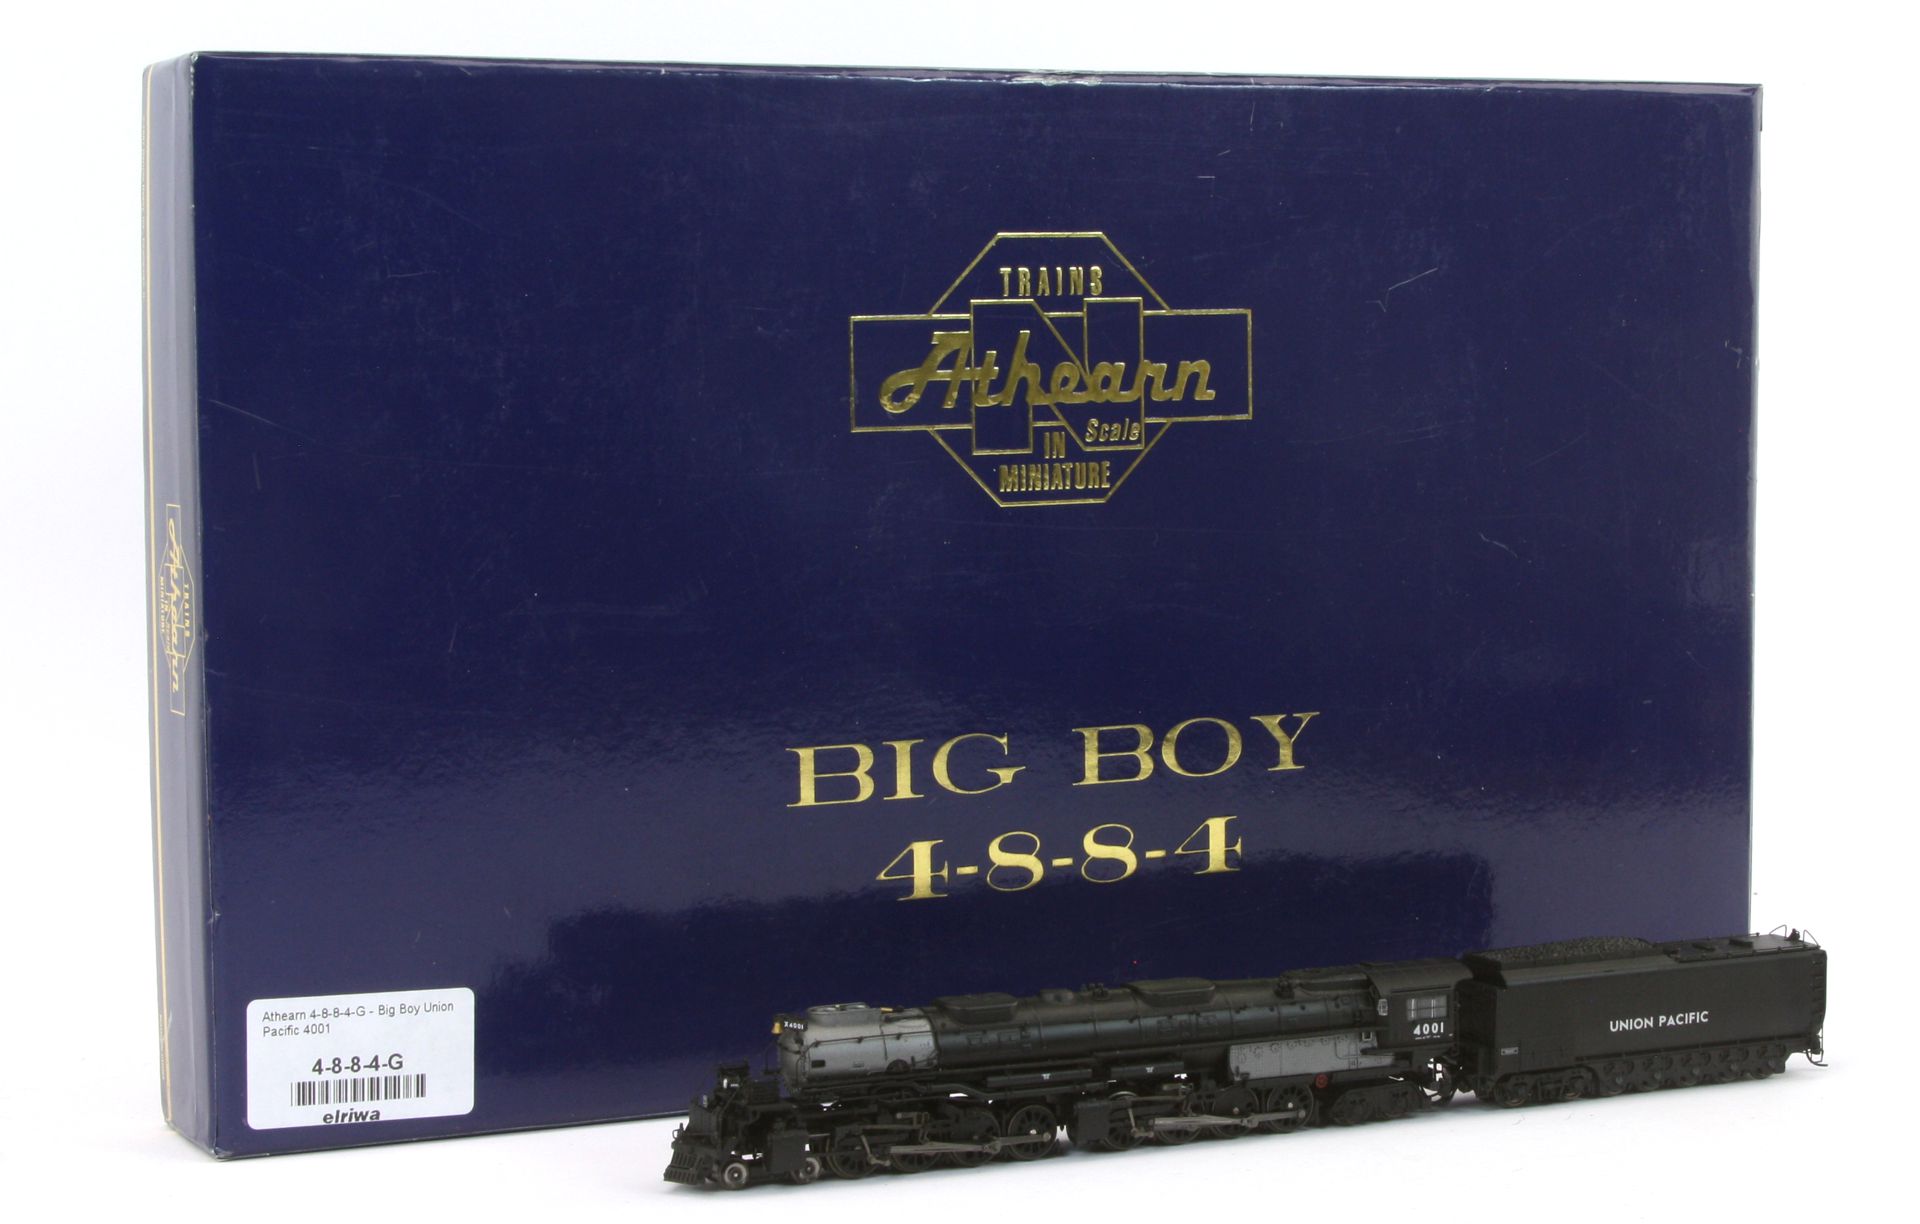 Athearn 4-8-8-4-G - Big Boy Union Pacific 4001